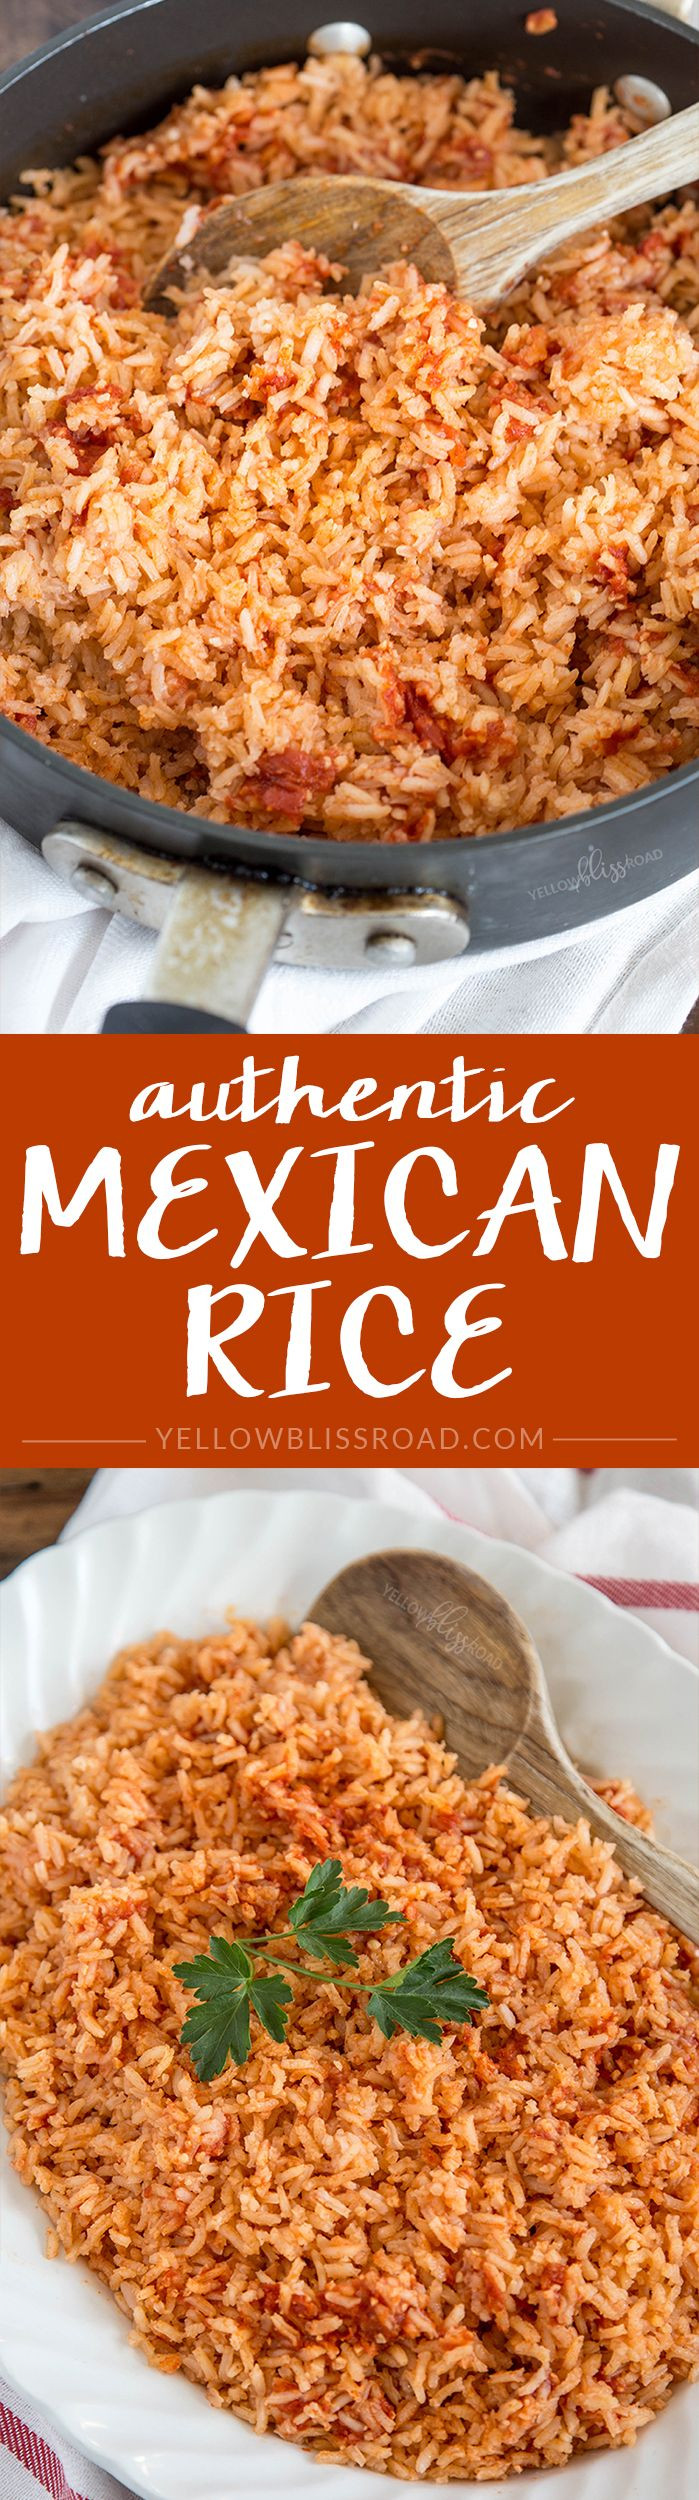 Authentic Mexican Restaurant Rice Recipe
 Authentic Mexican Rice Recipe